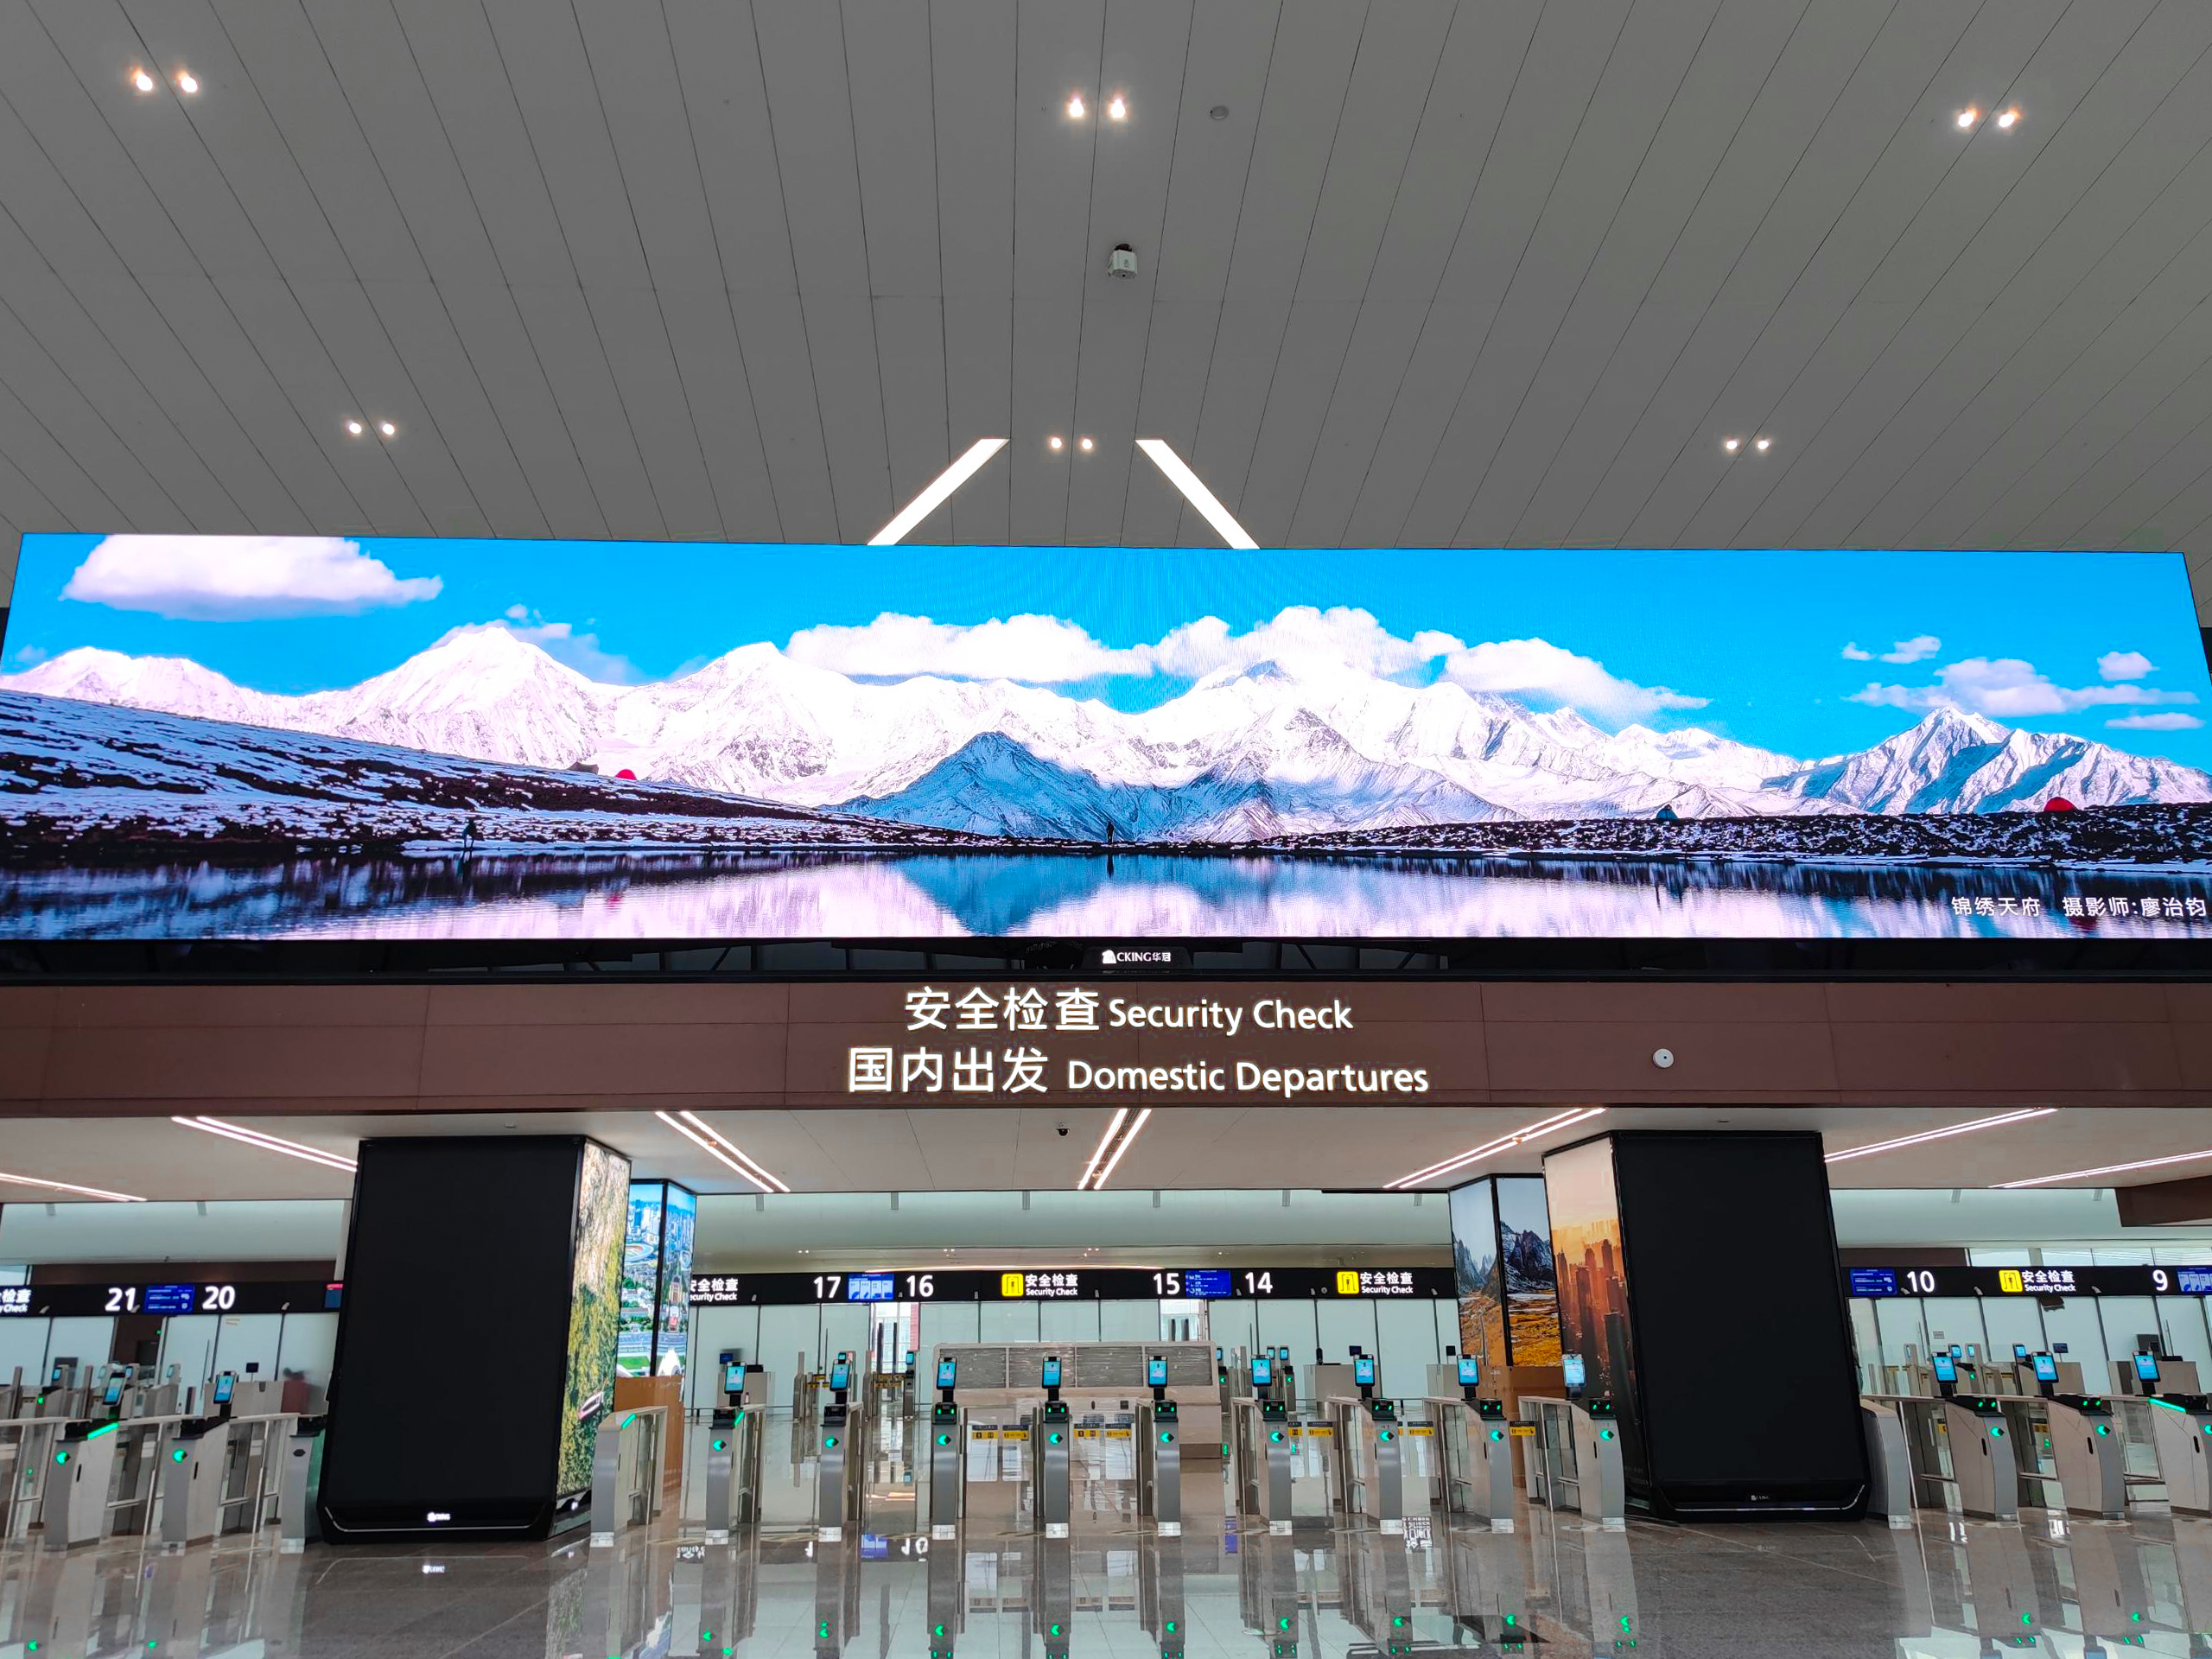 INFiLED LED Display light up at the Chengdu Tianfu International Airport